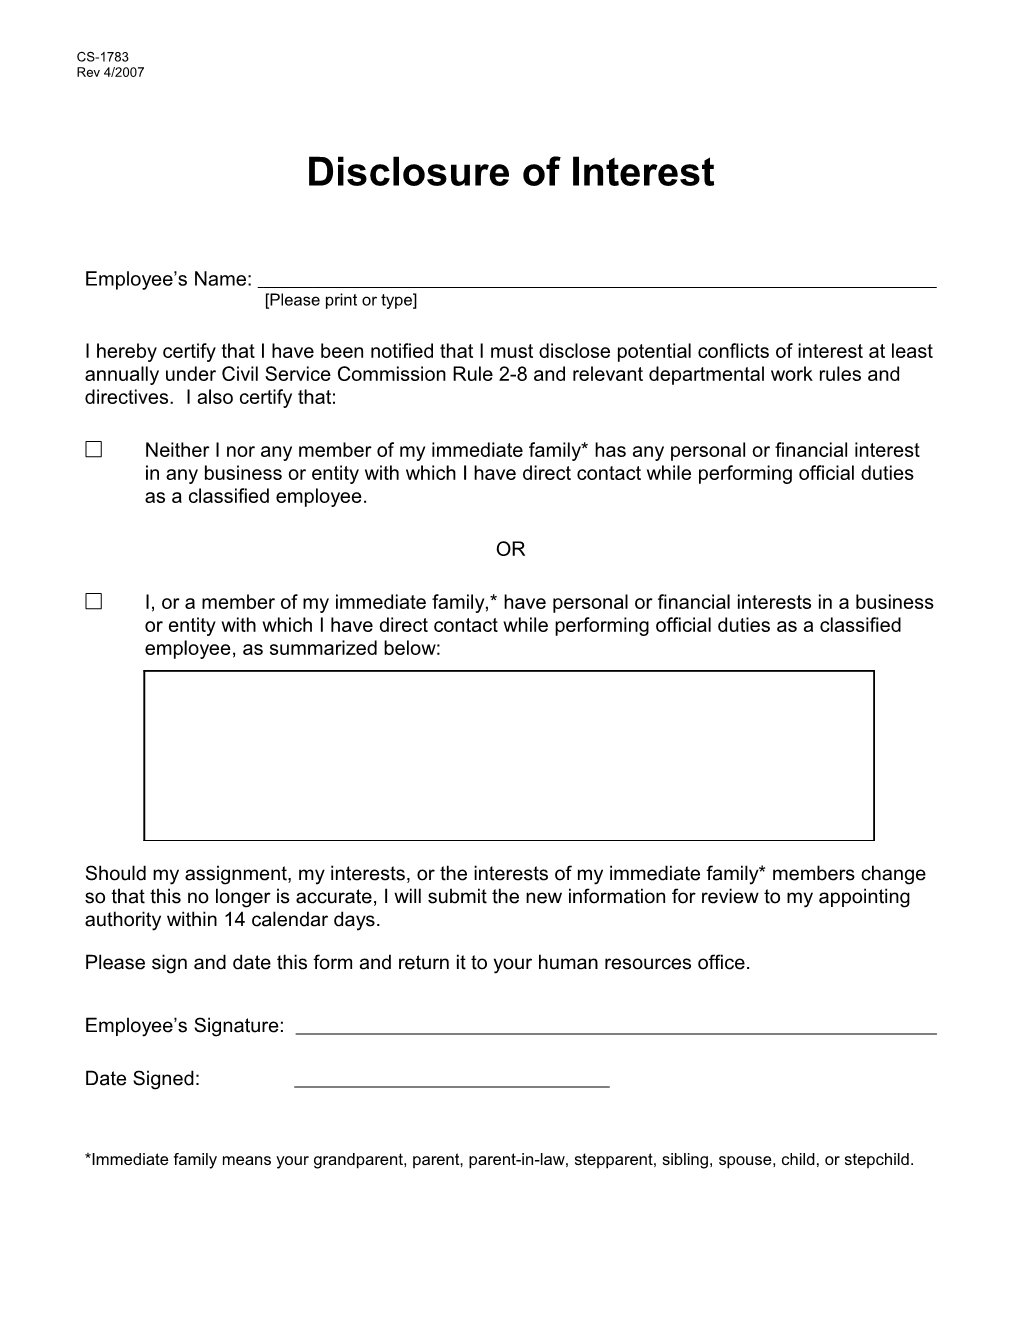 CS-1783 Disclosure of Interest